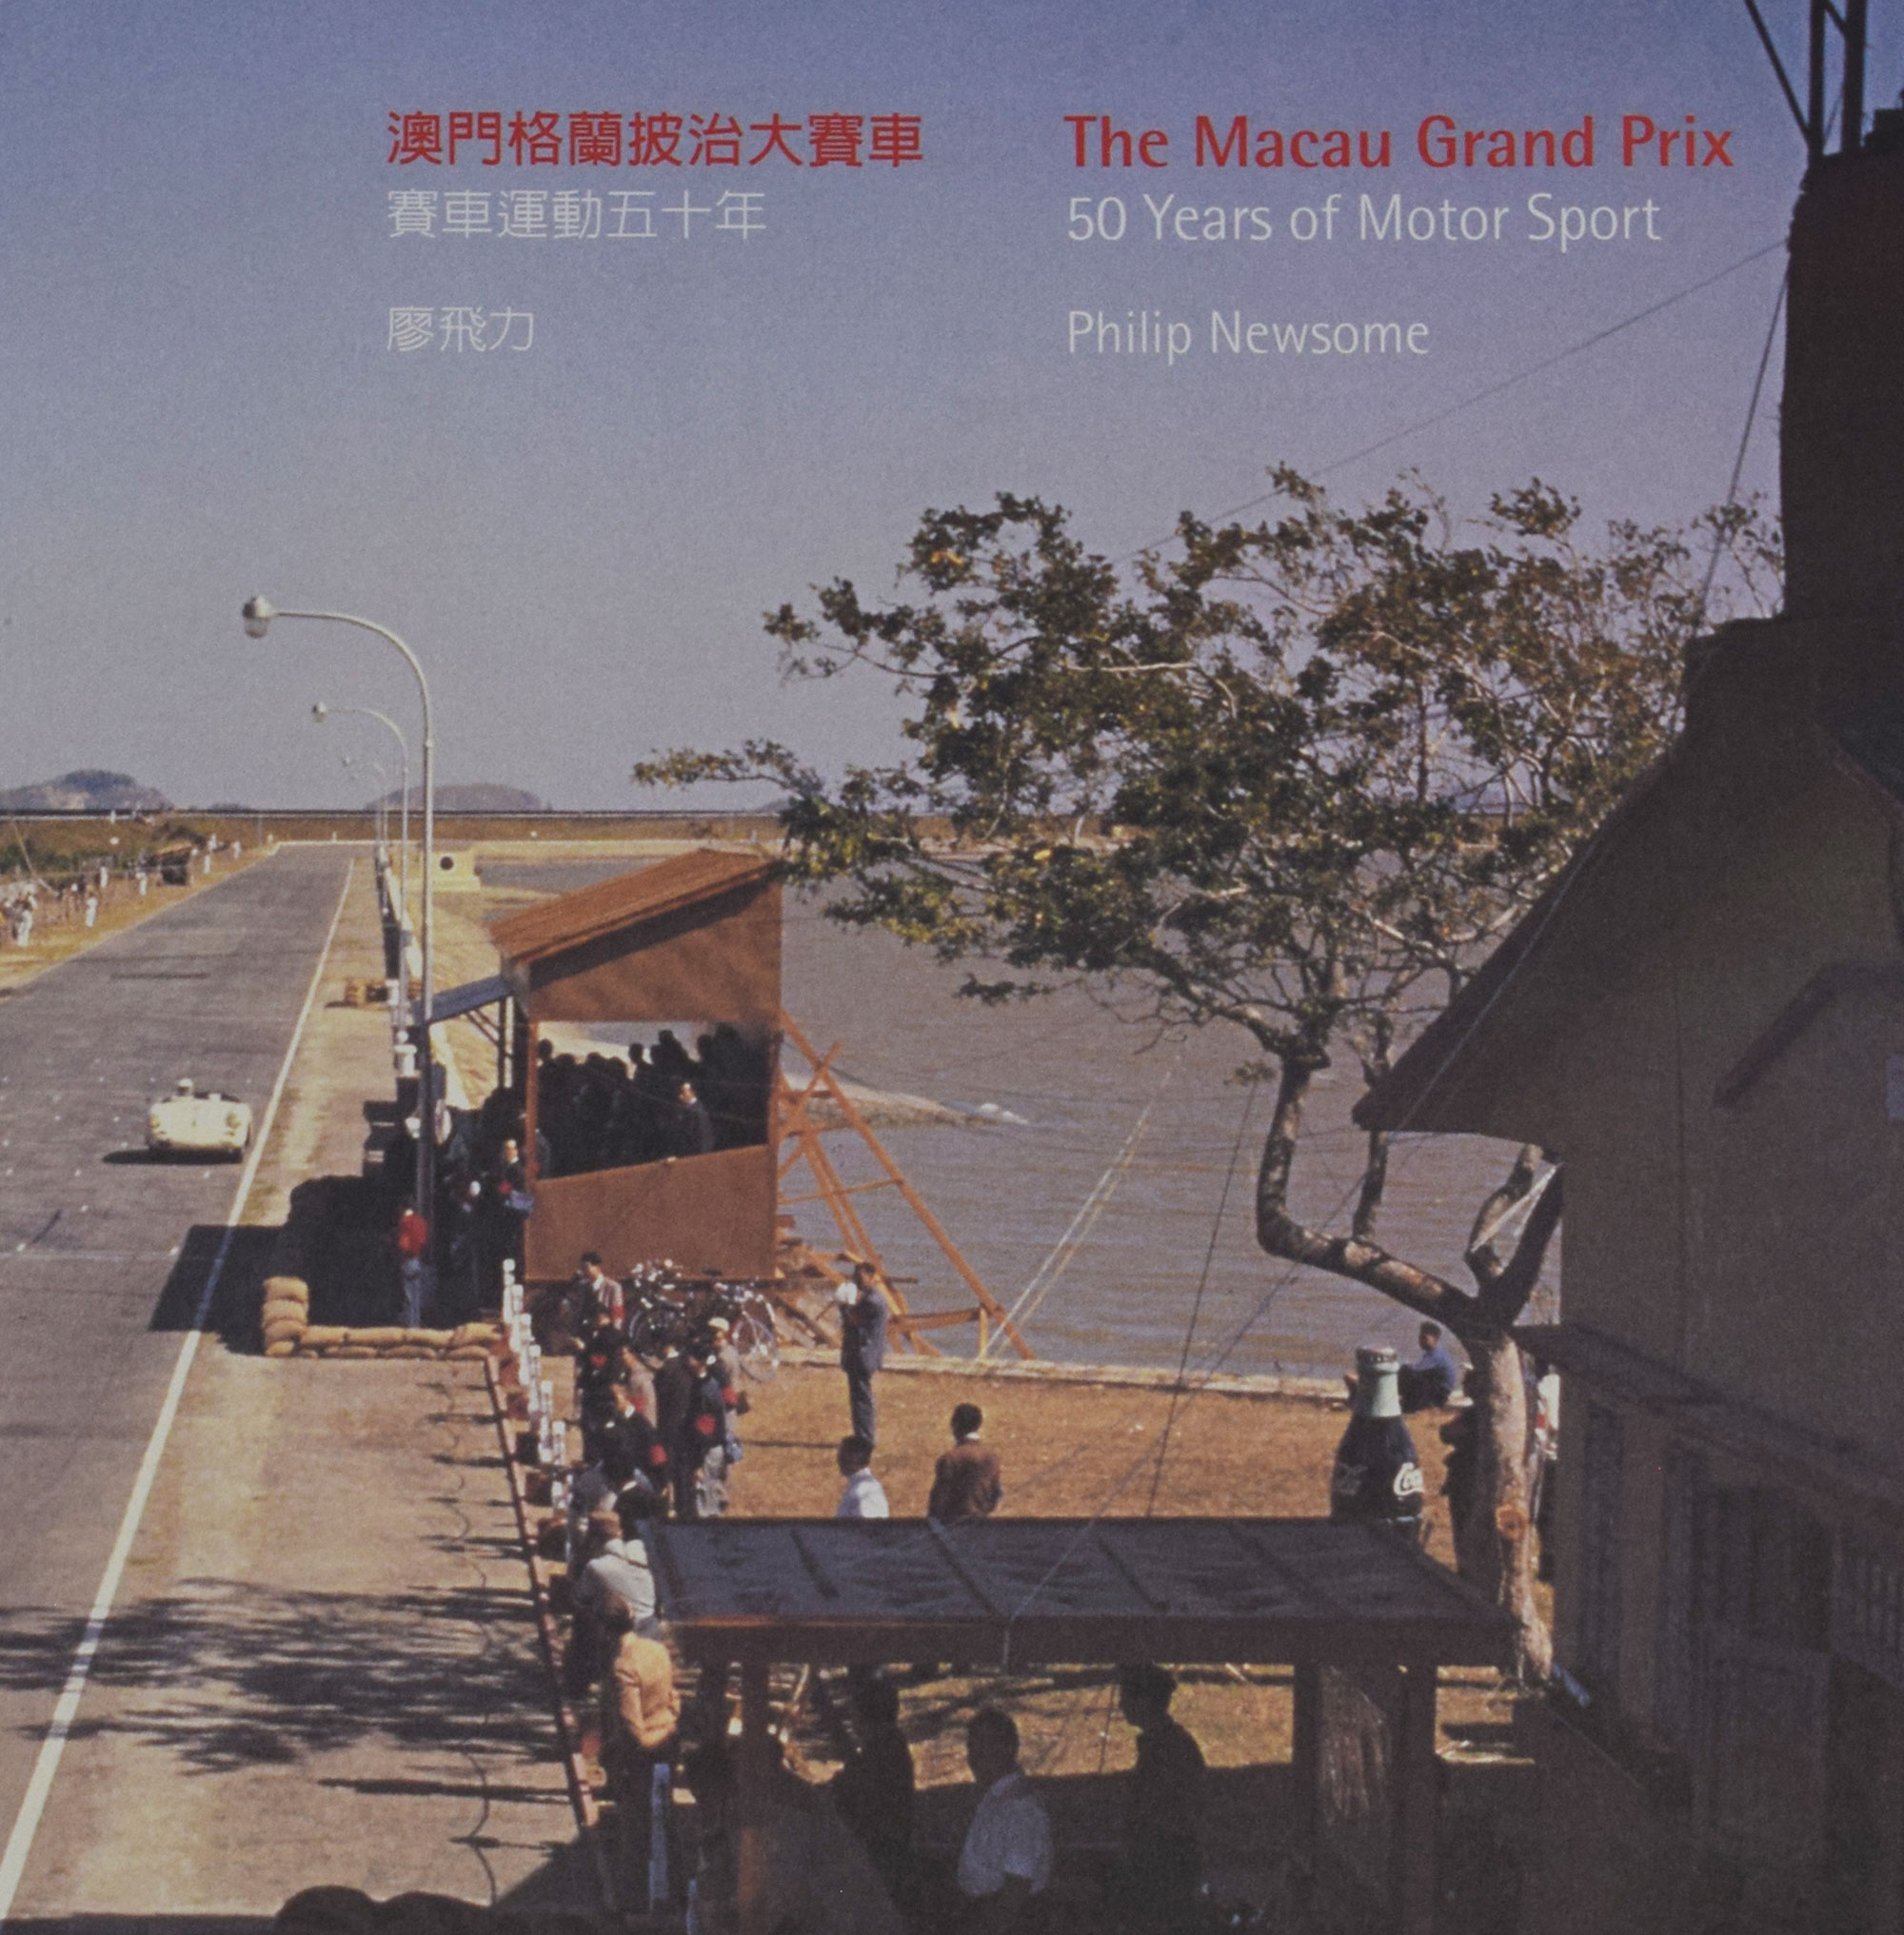 The Macau Grand Prix. 50 Years of Motor Sport.